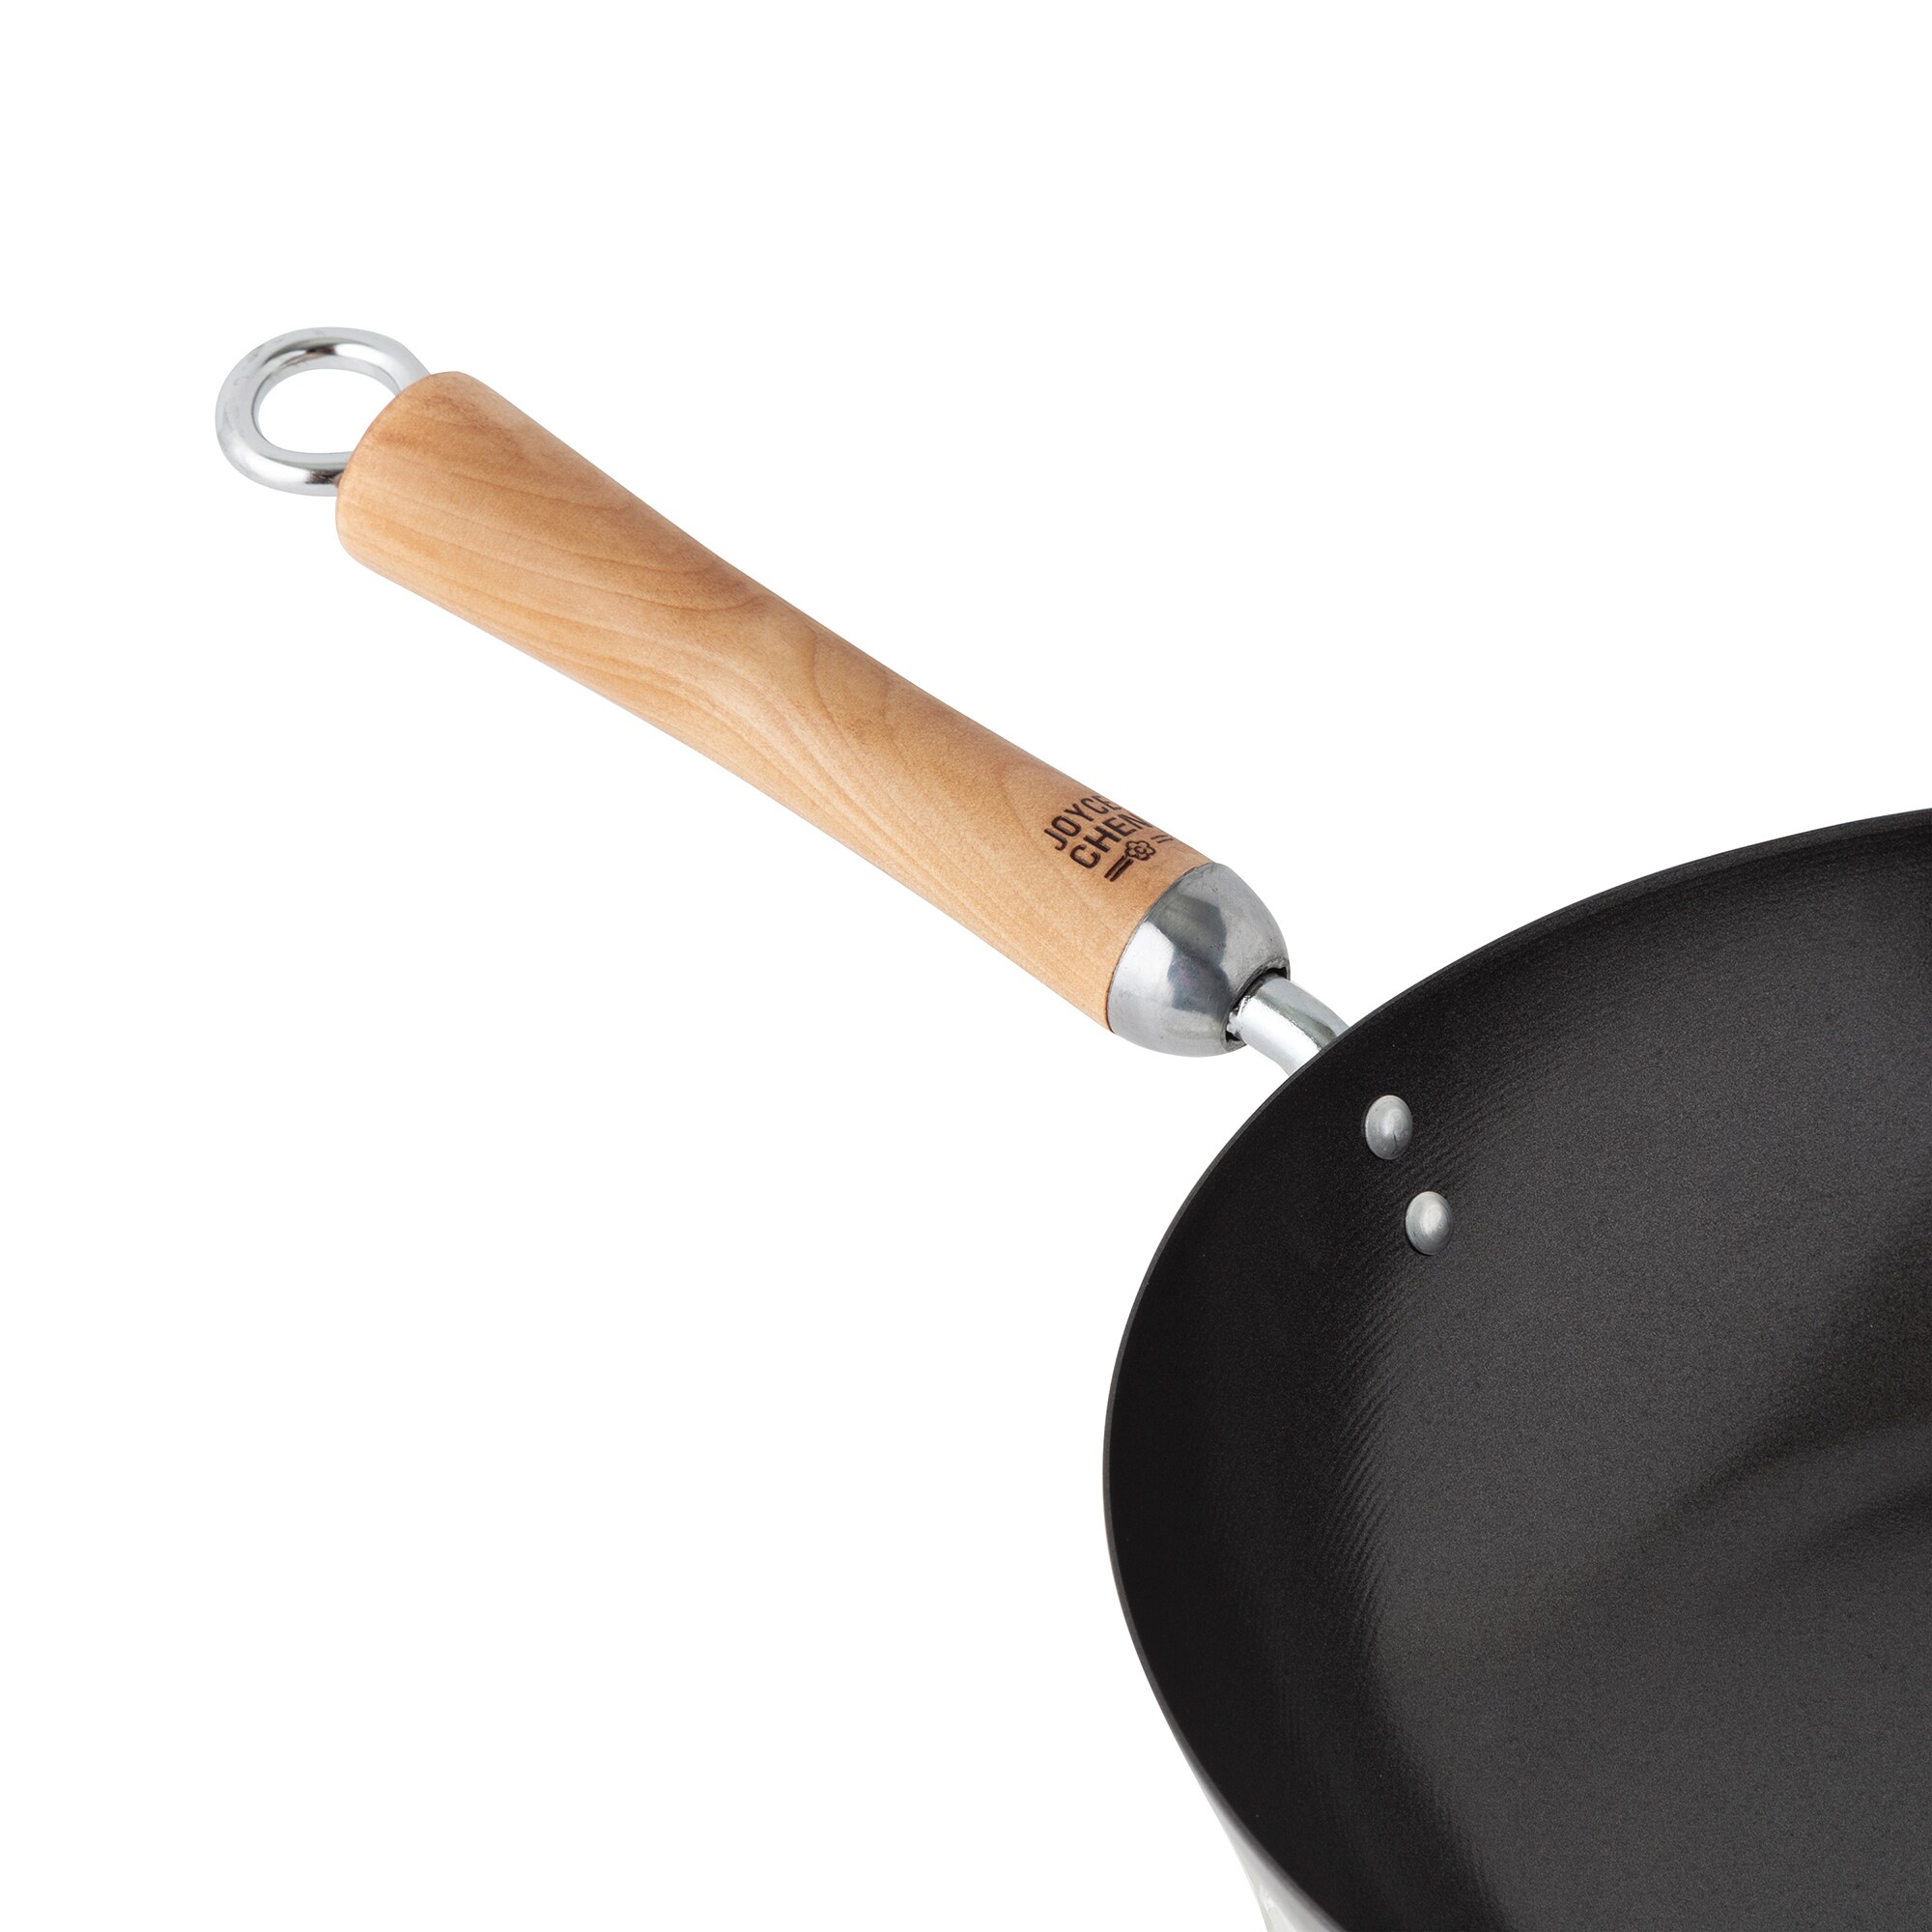 Joyce Chen Professional Series Carbon Steel 12-Inch Stir Fry Pan